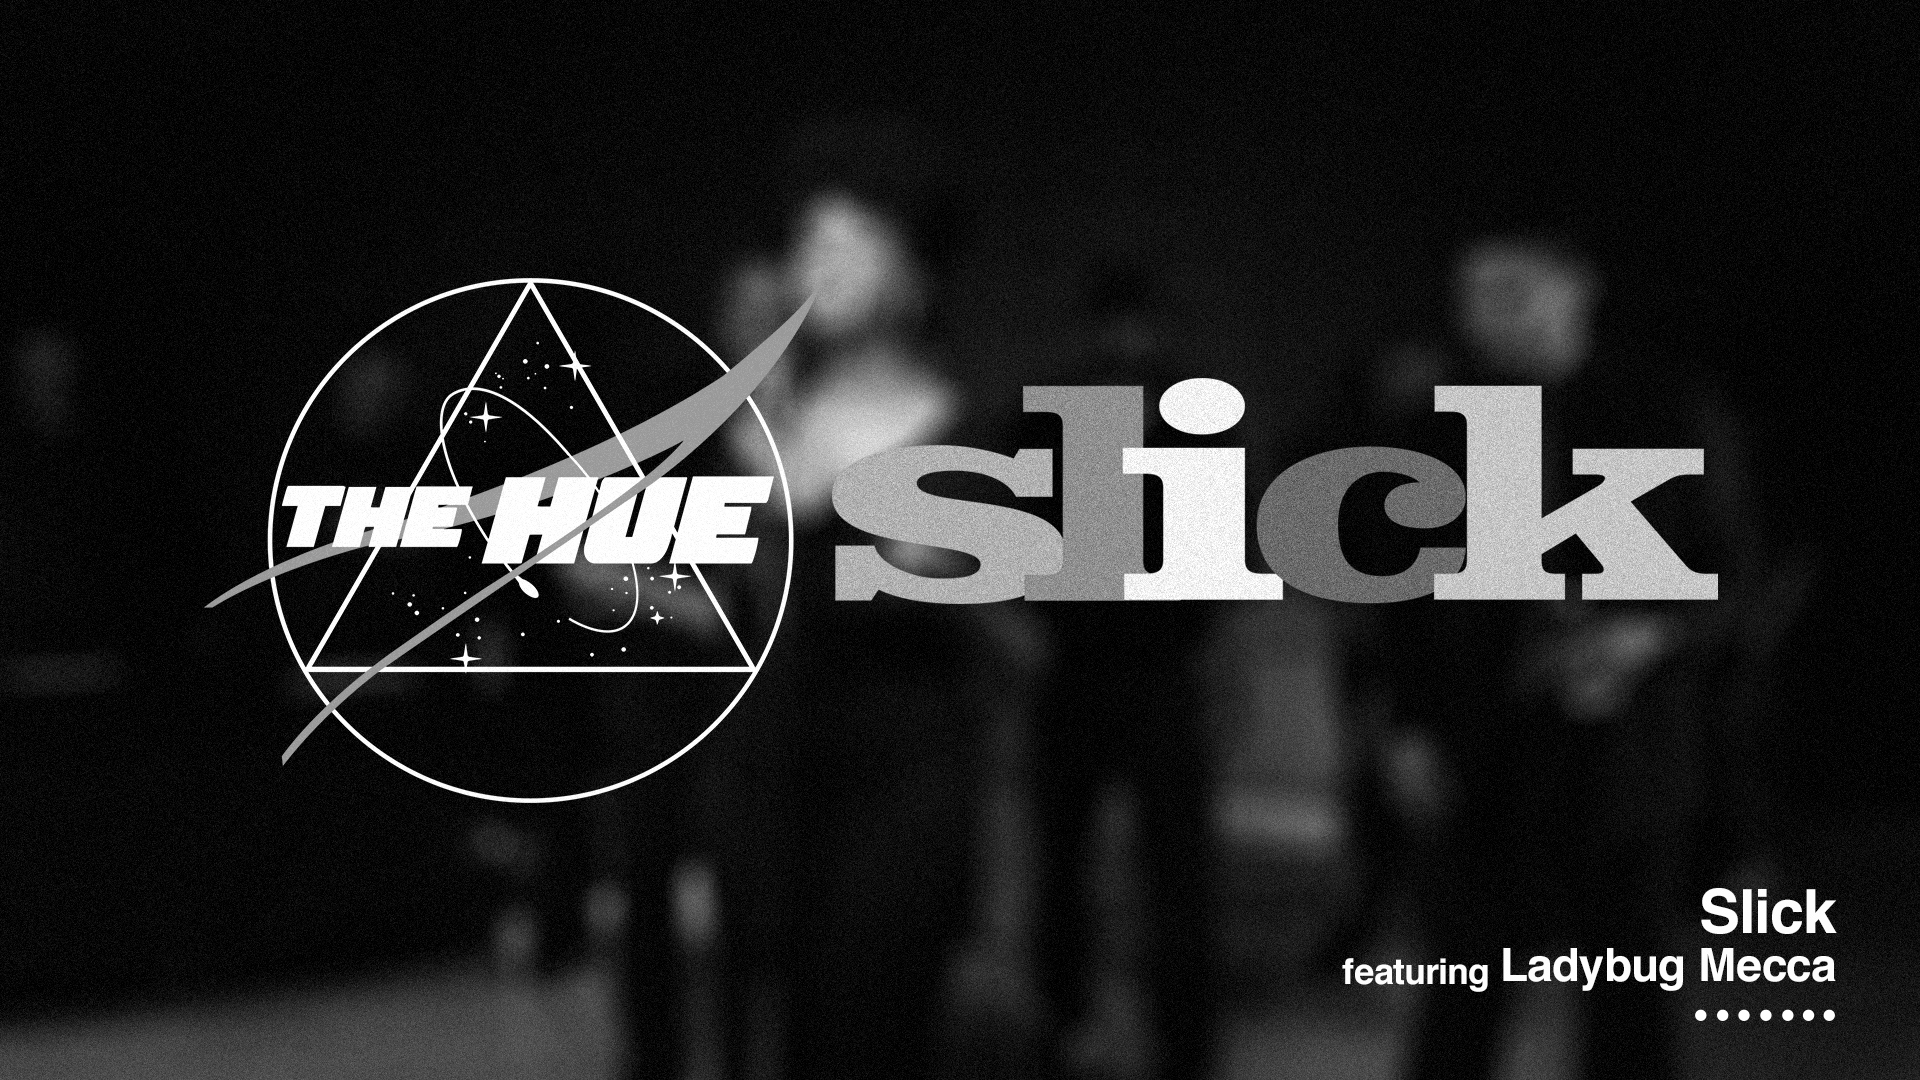 Video: The Hue — “Slick” featuring Ladybug Mecca